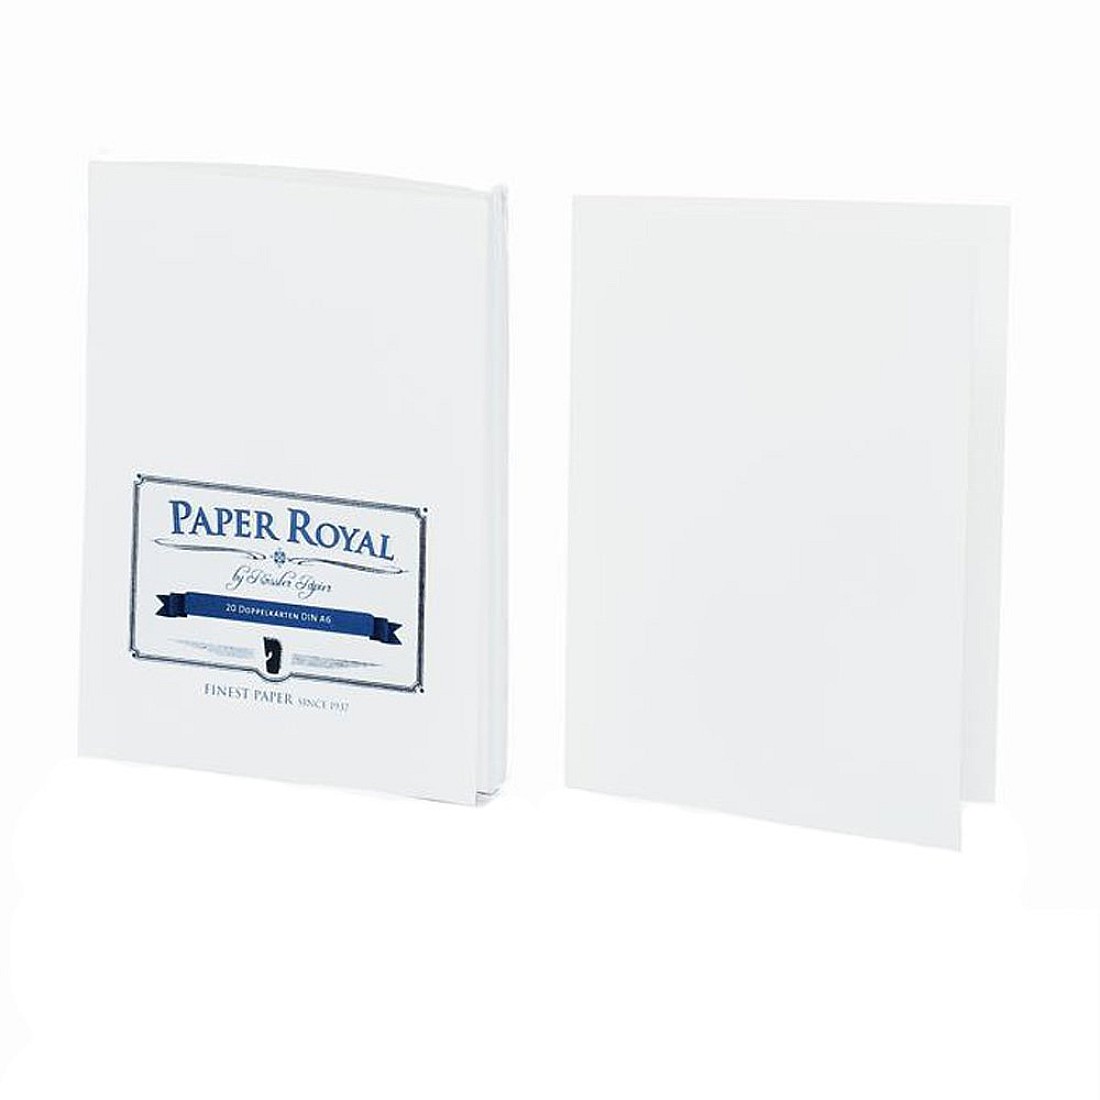 Wiskunde Previs site Hectare Rössler Papier Paper Royal White A6 Double Card per 20 Sheets |  Appelboom.com